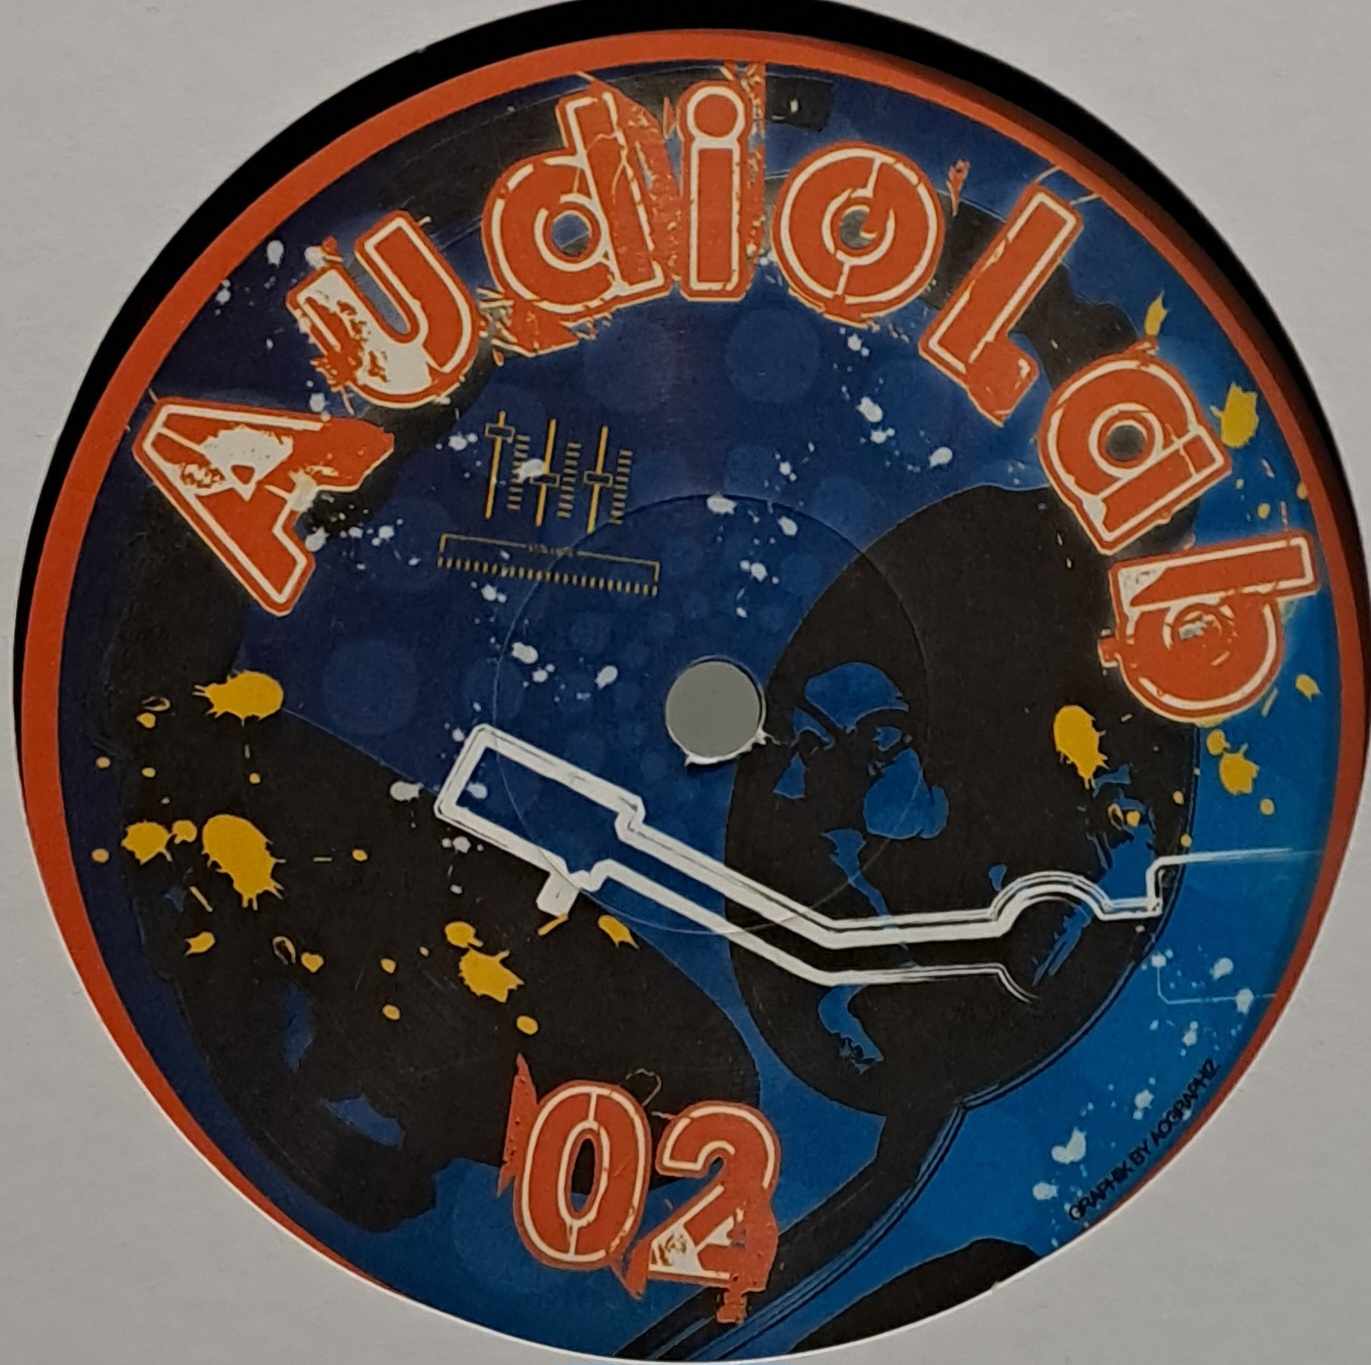 Audiolab 02 - vinyle freetekno